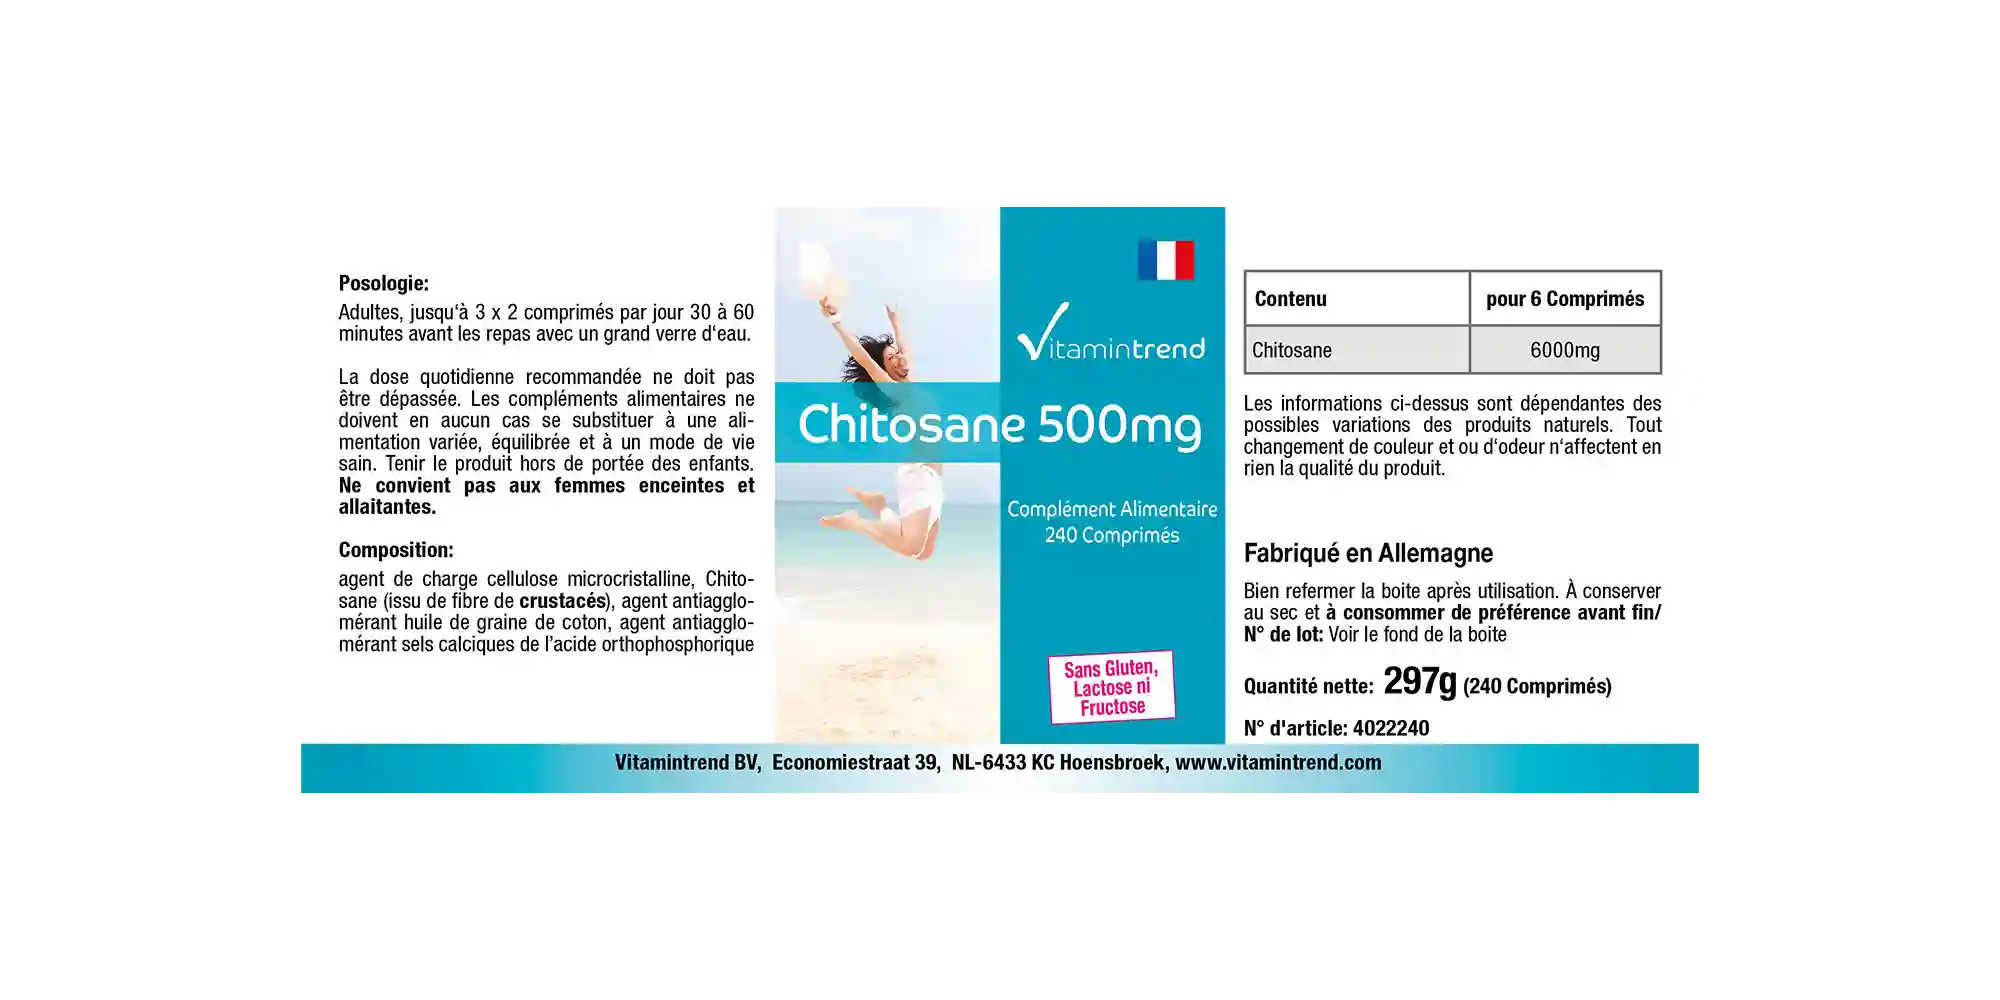 Chitosan 500mg Fettblocker 240 Tabletten Ballaststoff